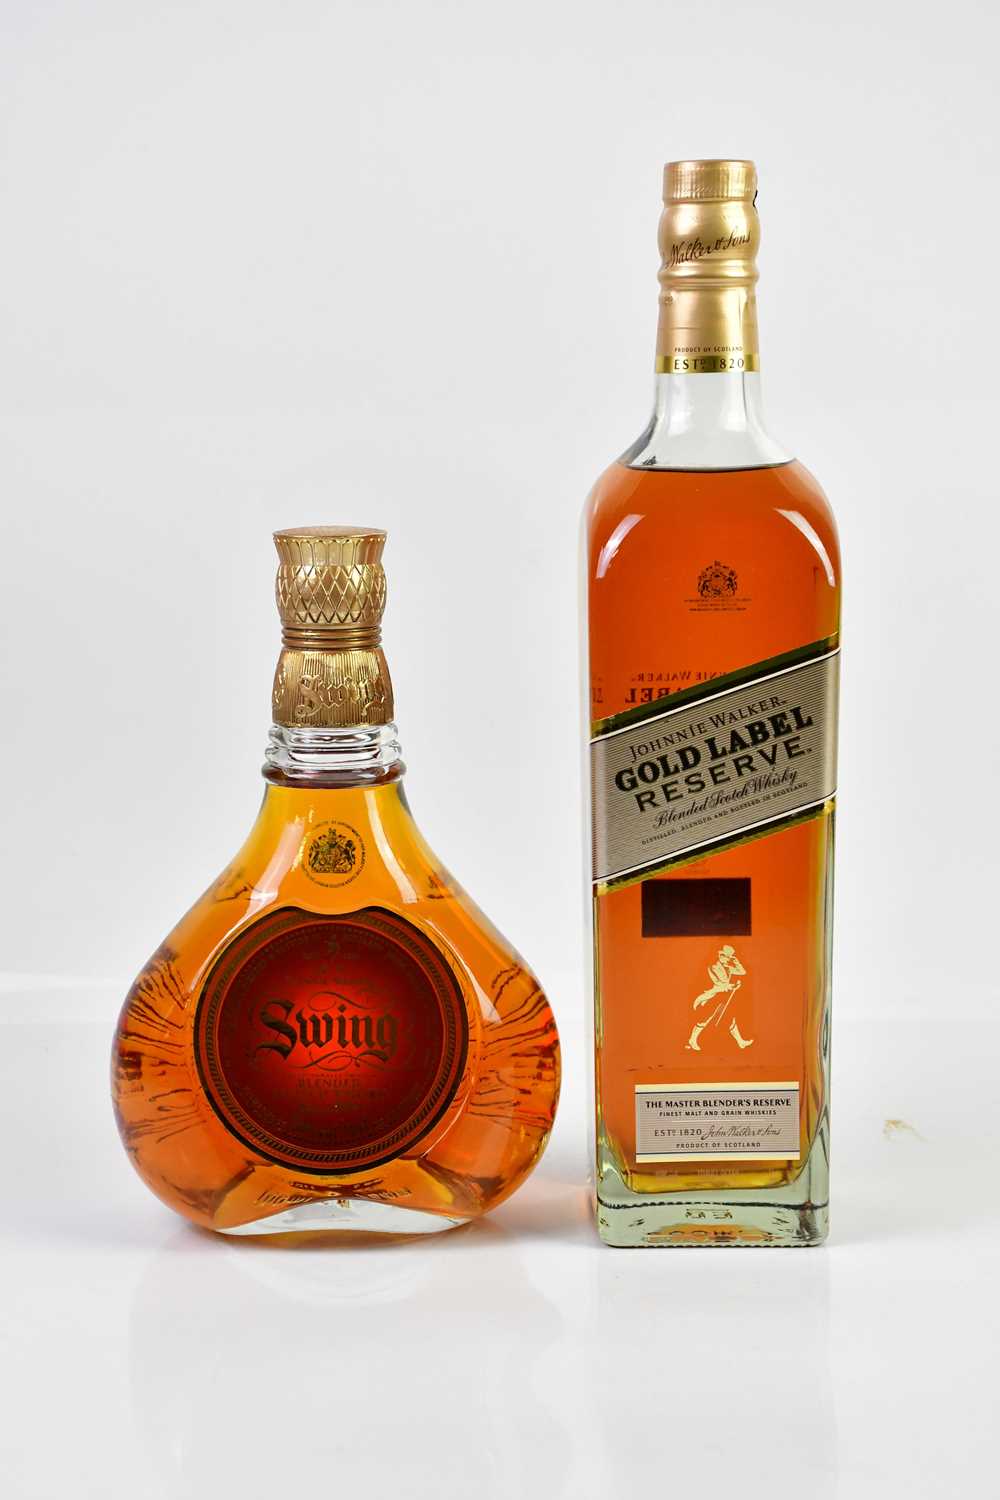 WHISKY; a bottle of Johnnie Walker Gold Label Reserve Blended Scotch whisky, 40%, 1l, boxed, - Image 2 of 3